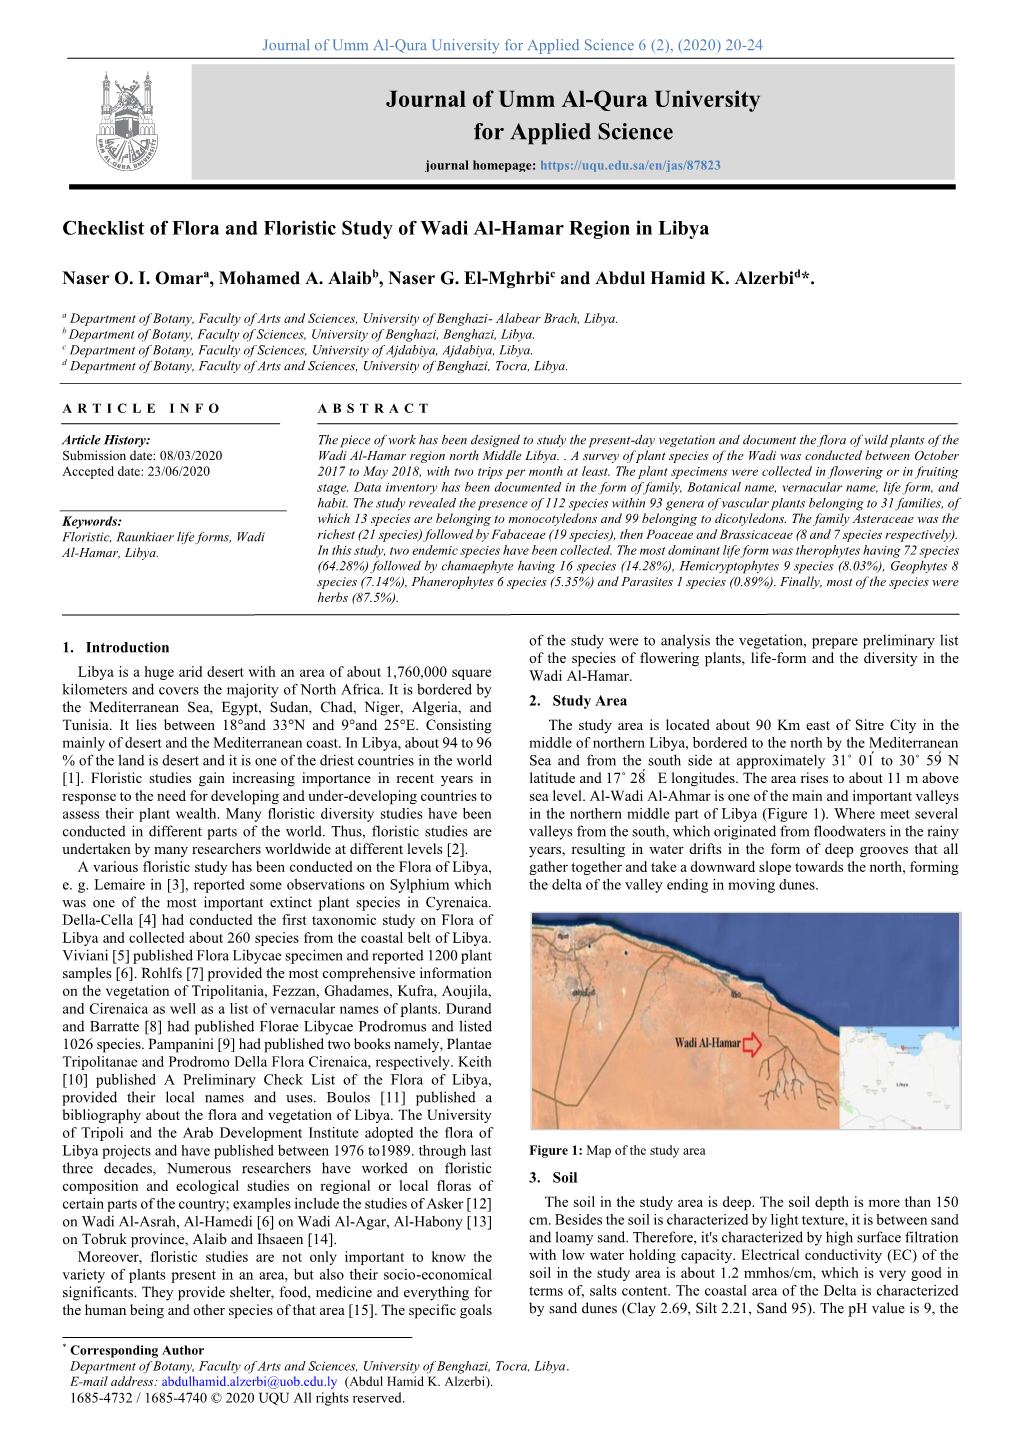 Checklist of Flora and Floristic Study of Wadi Al-Hamar Region in Libya